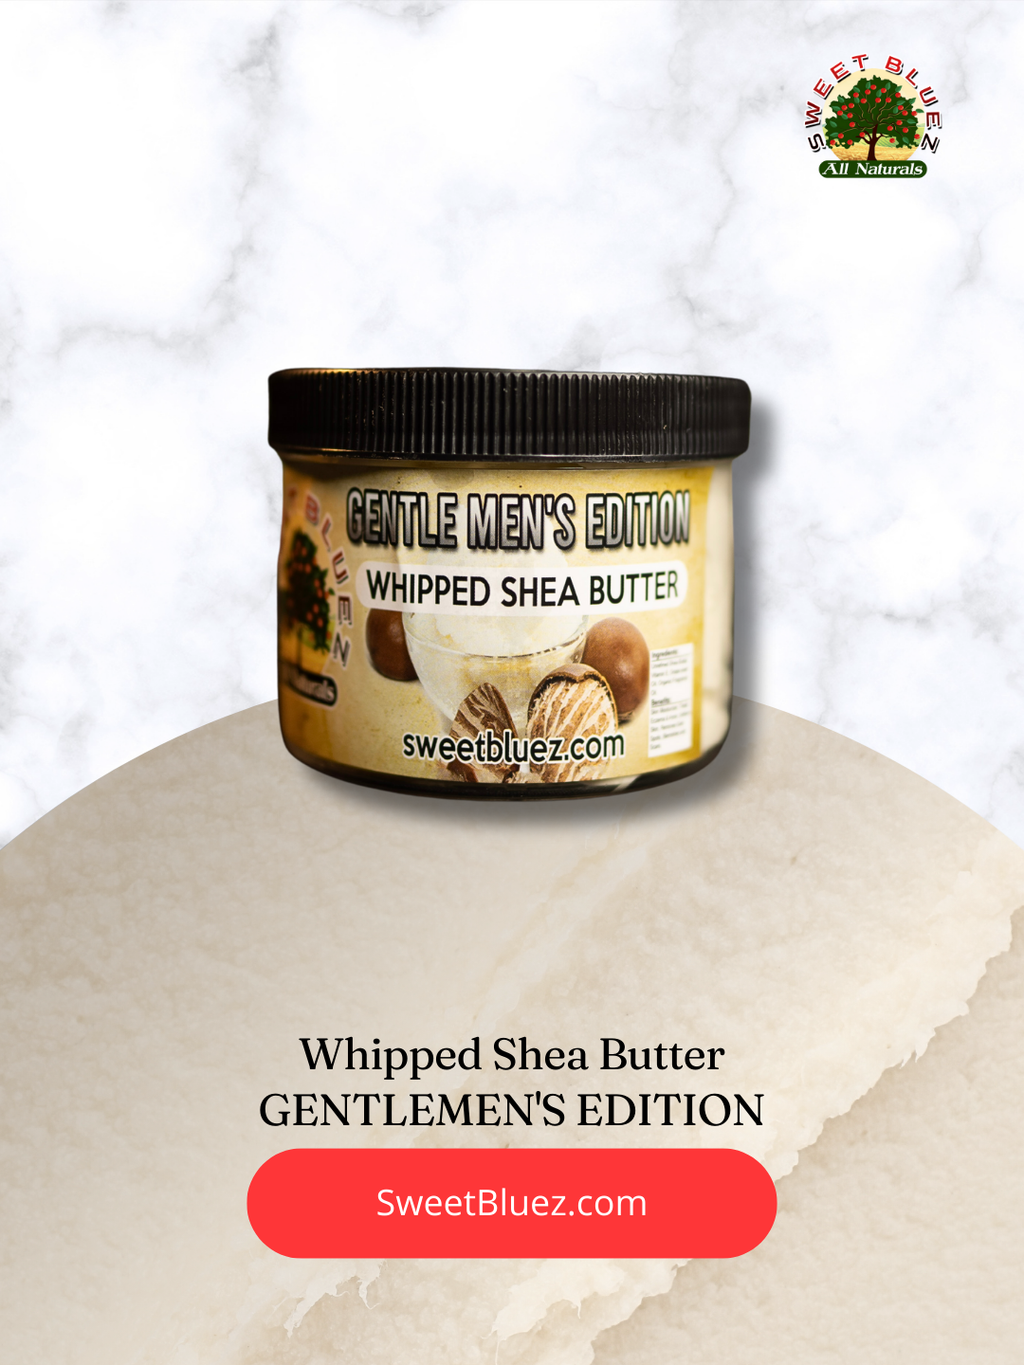 Gentlemen’s Edition Whipped Shea Butter